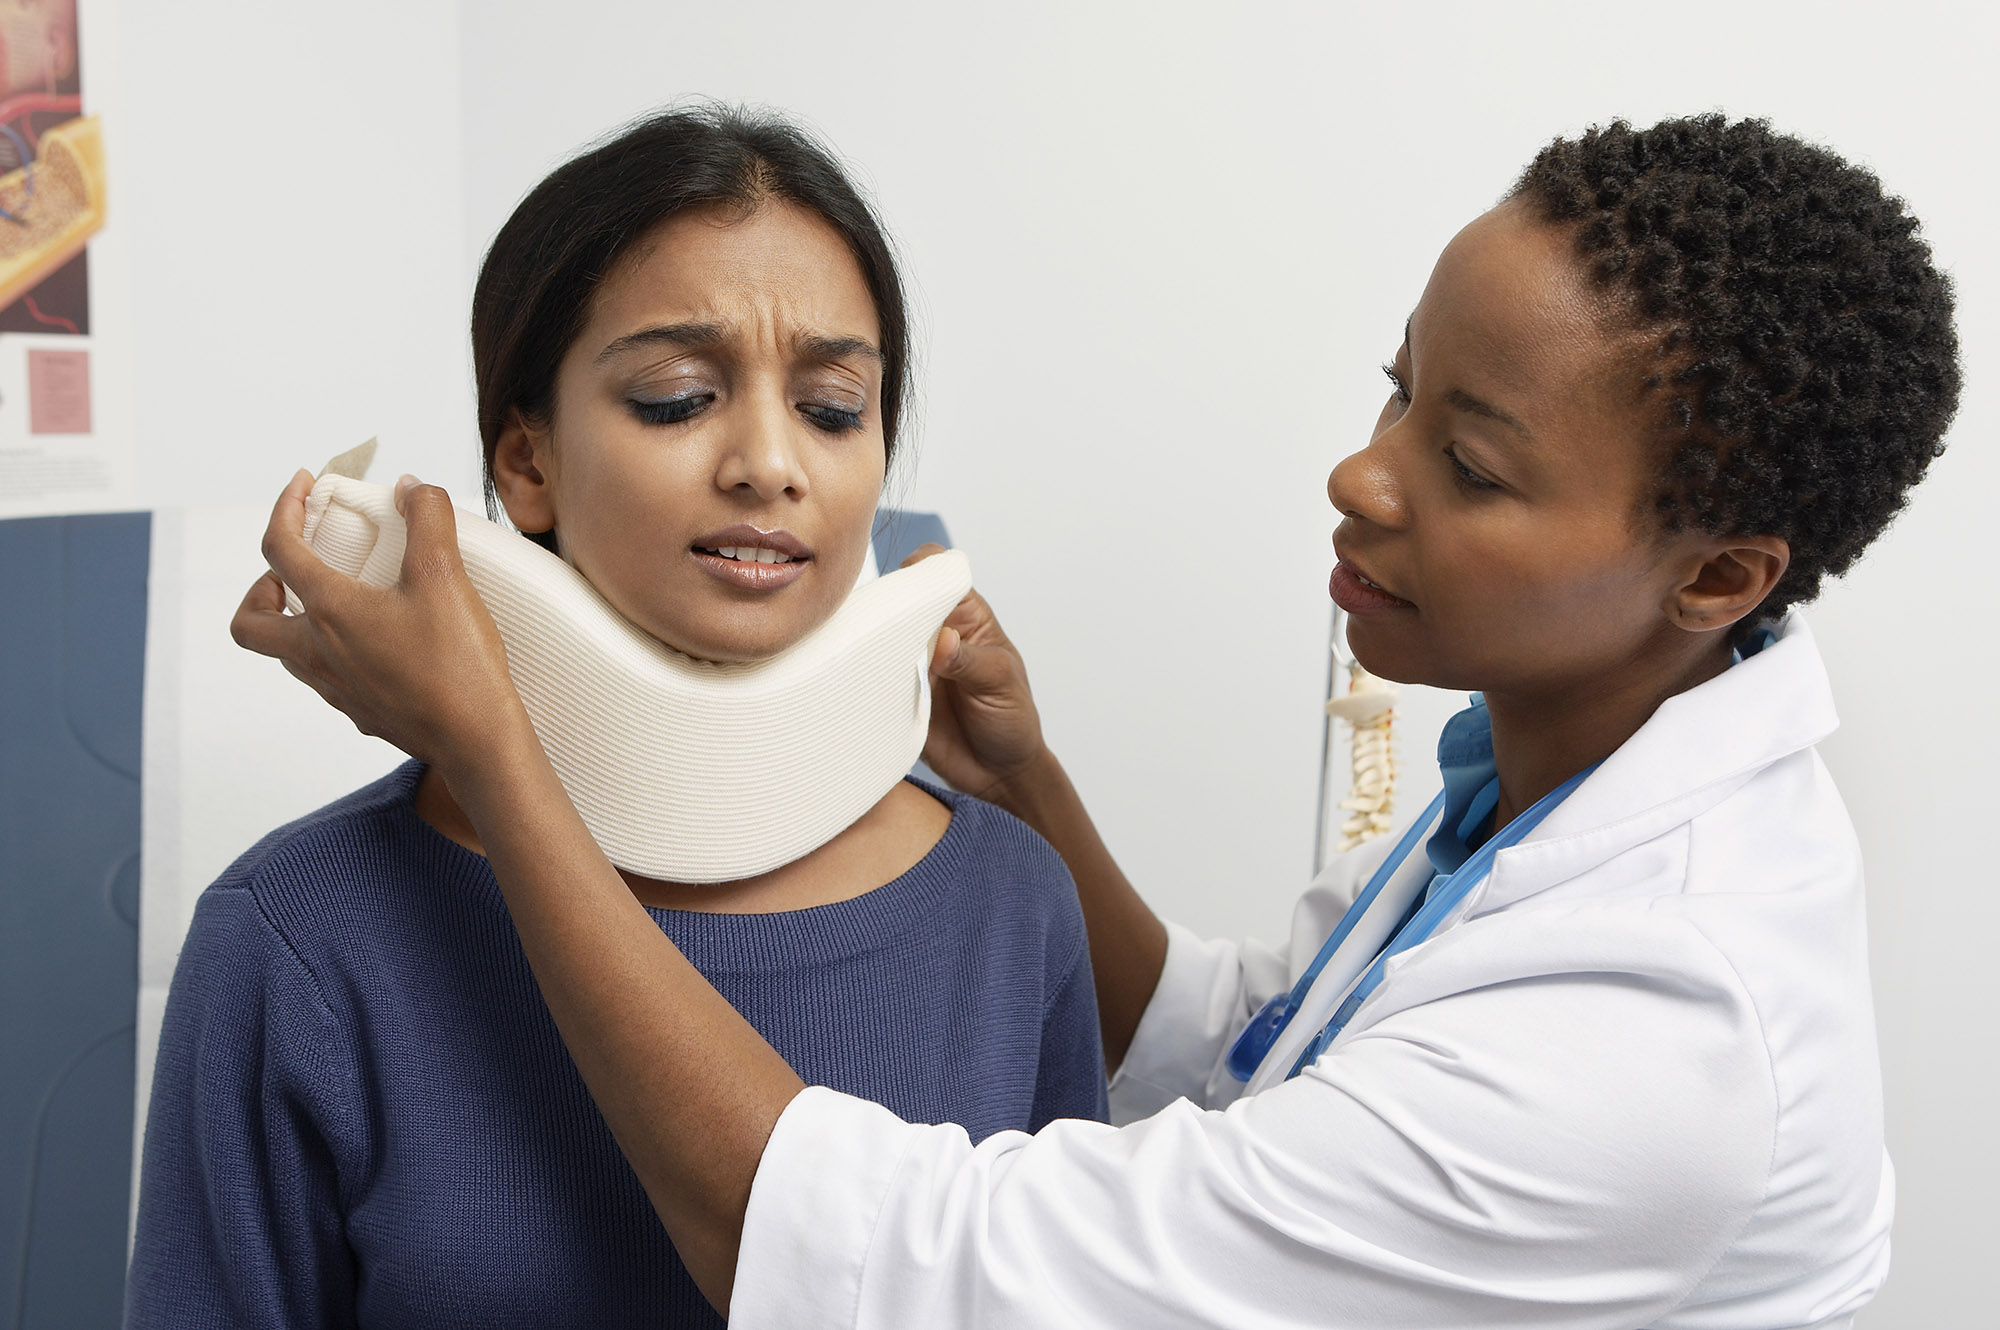 neck injury medical negligence compensation claims Bradford